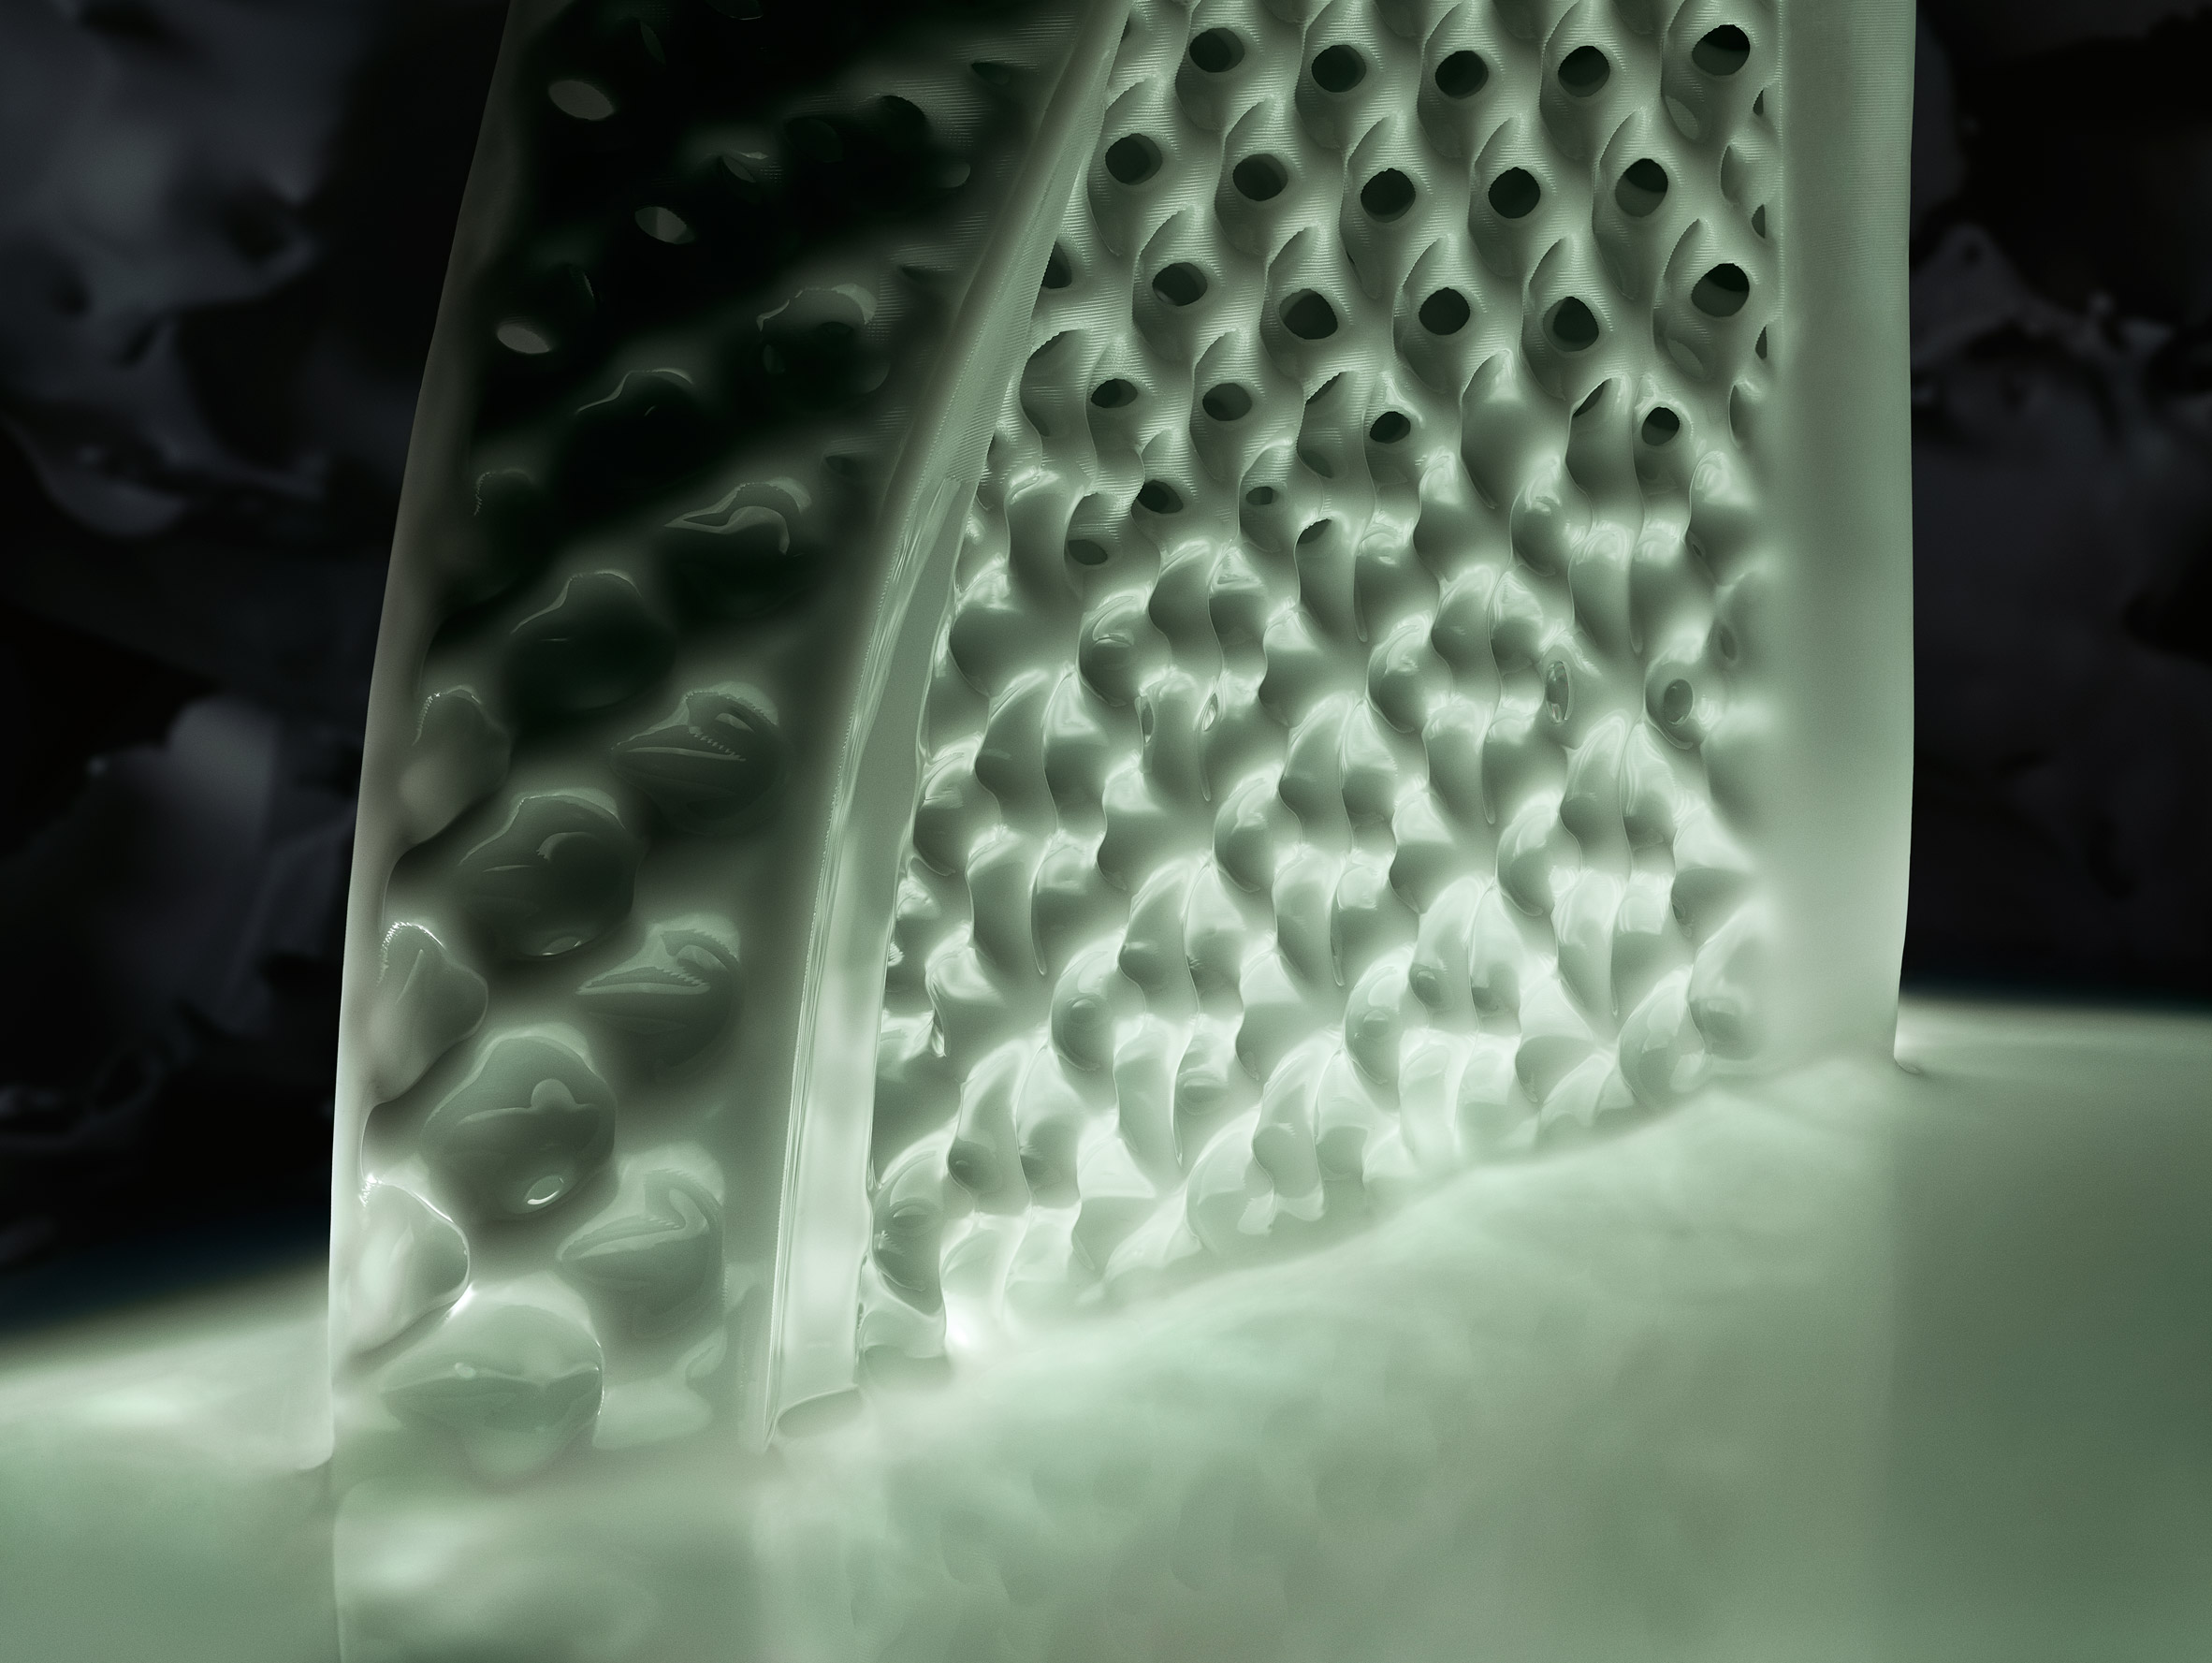 Adidas Futurecraft 4D using light heat